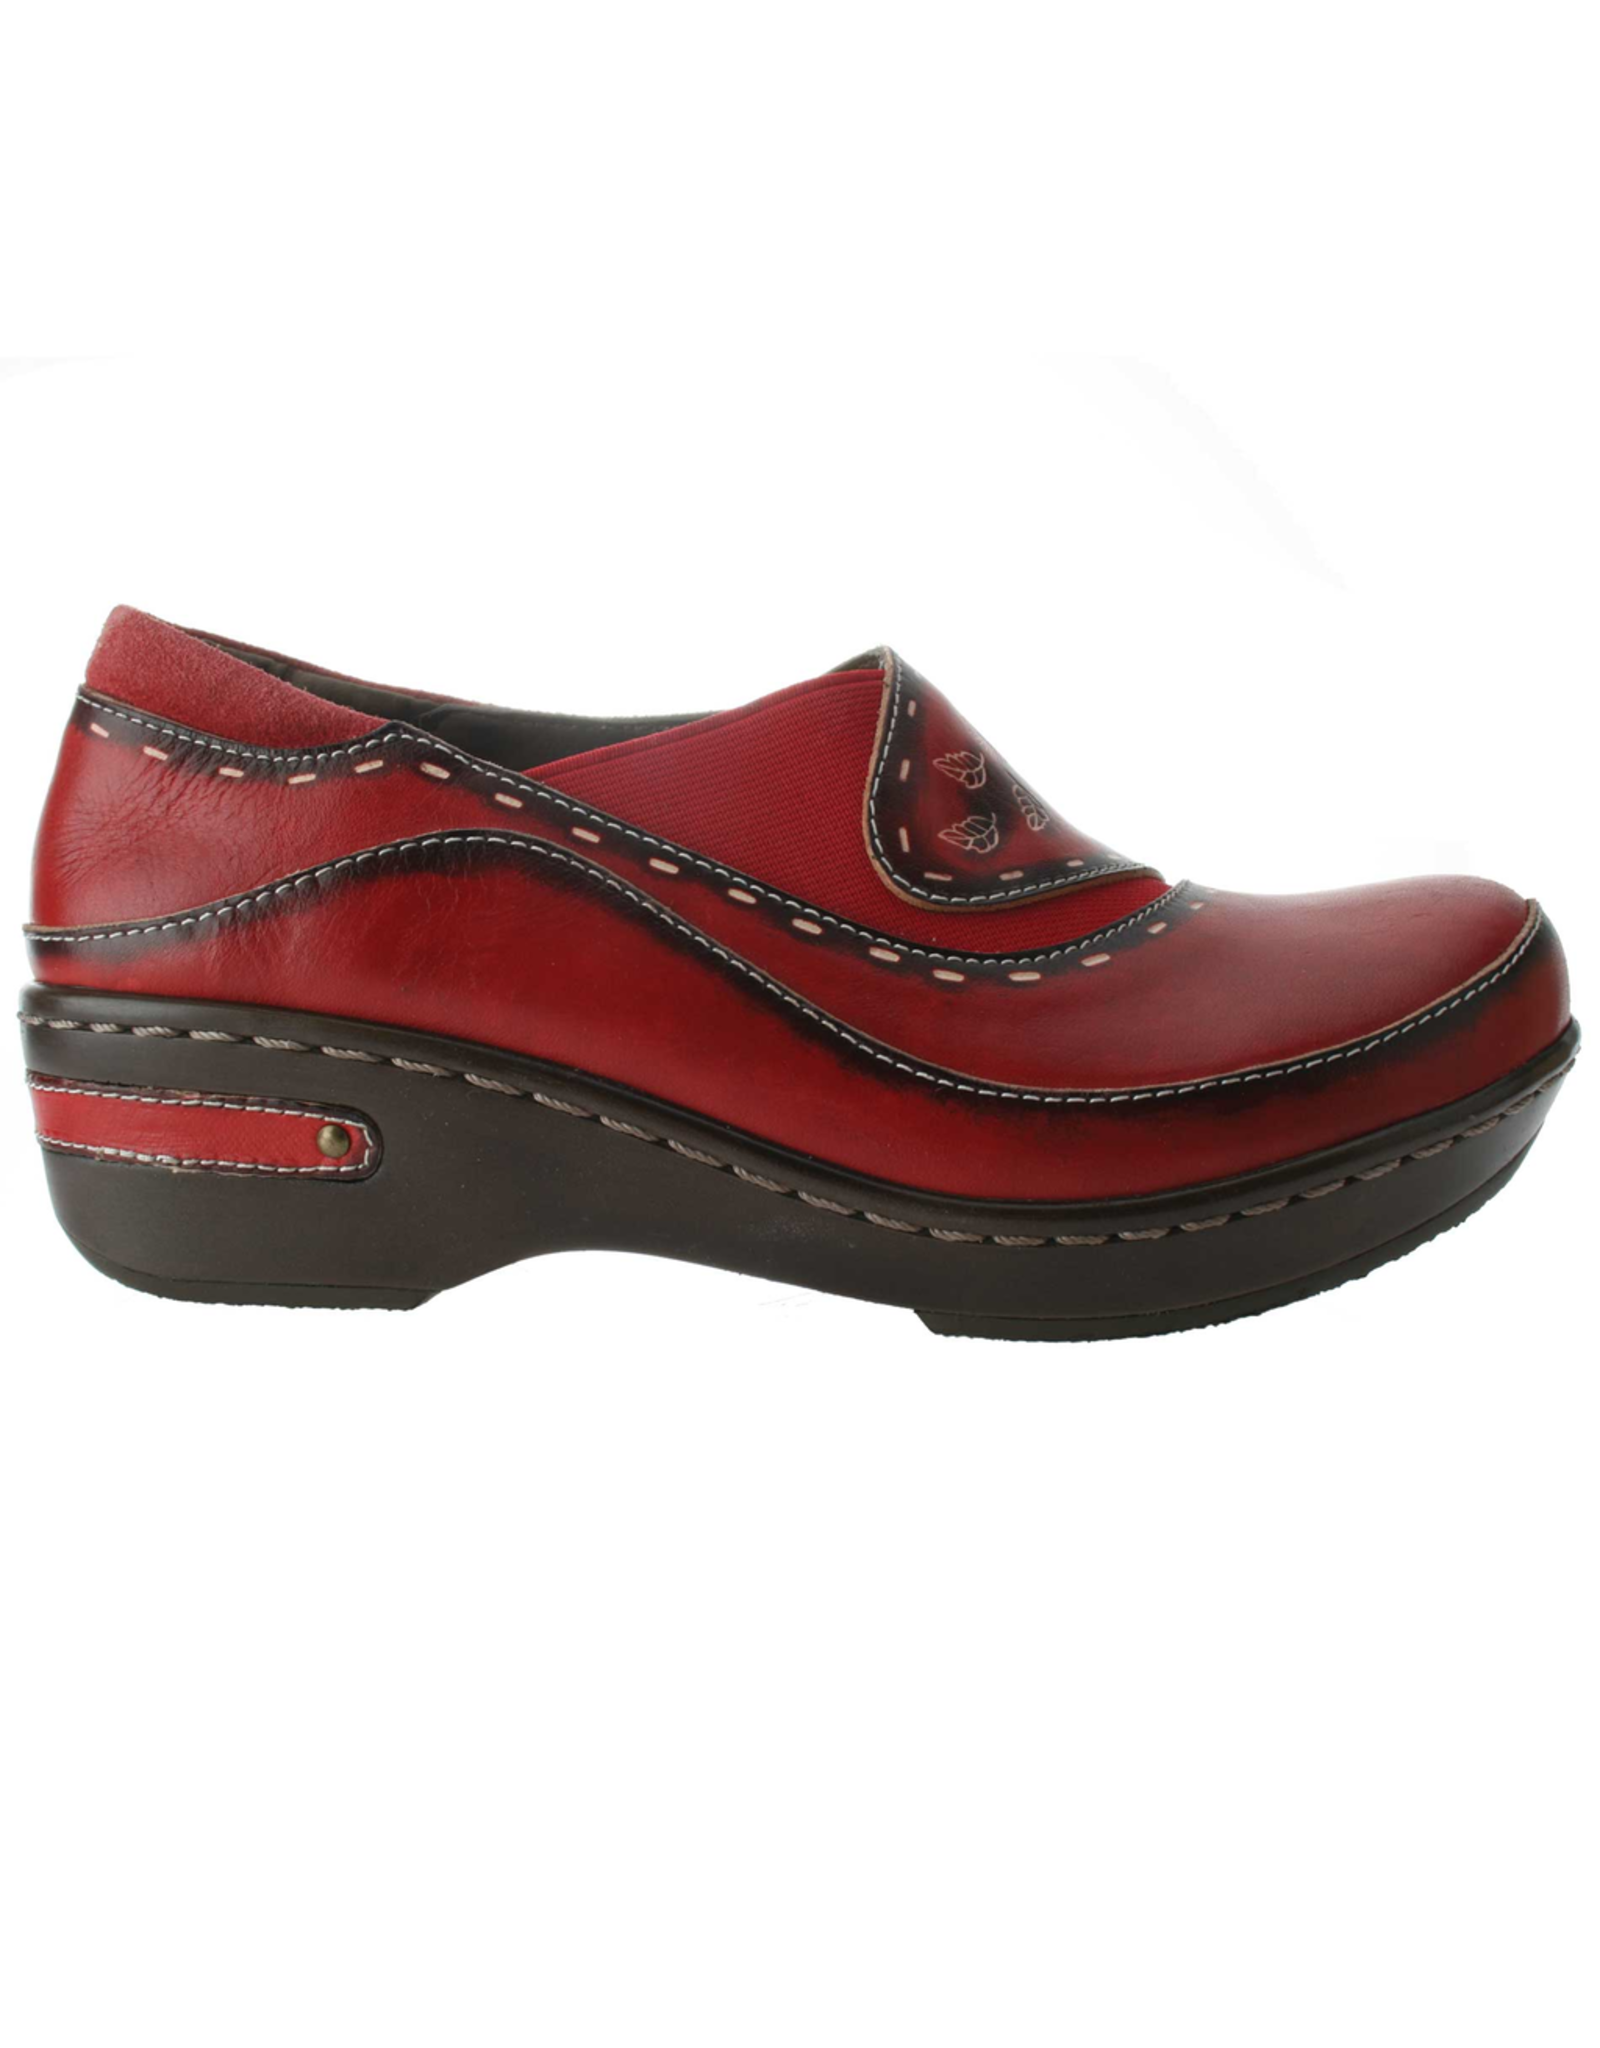 Spring Footwear Red Leather Clog - Passport To Peru